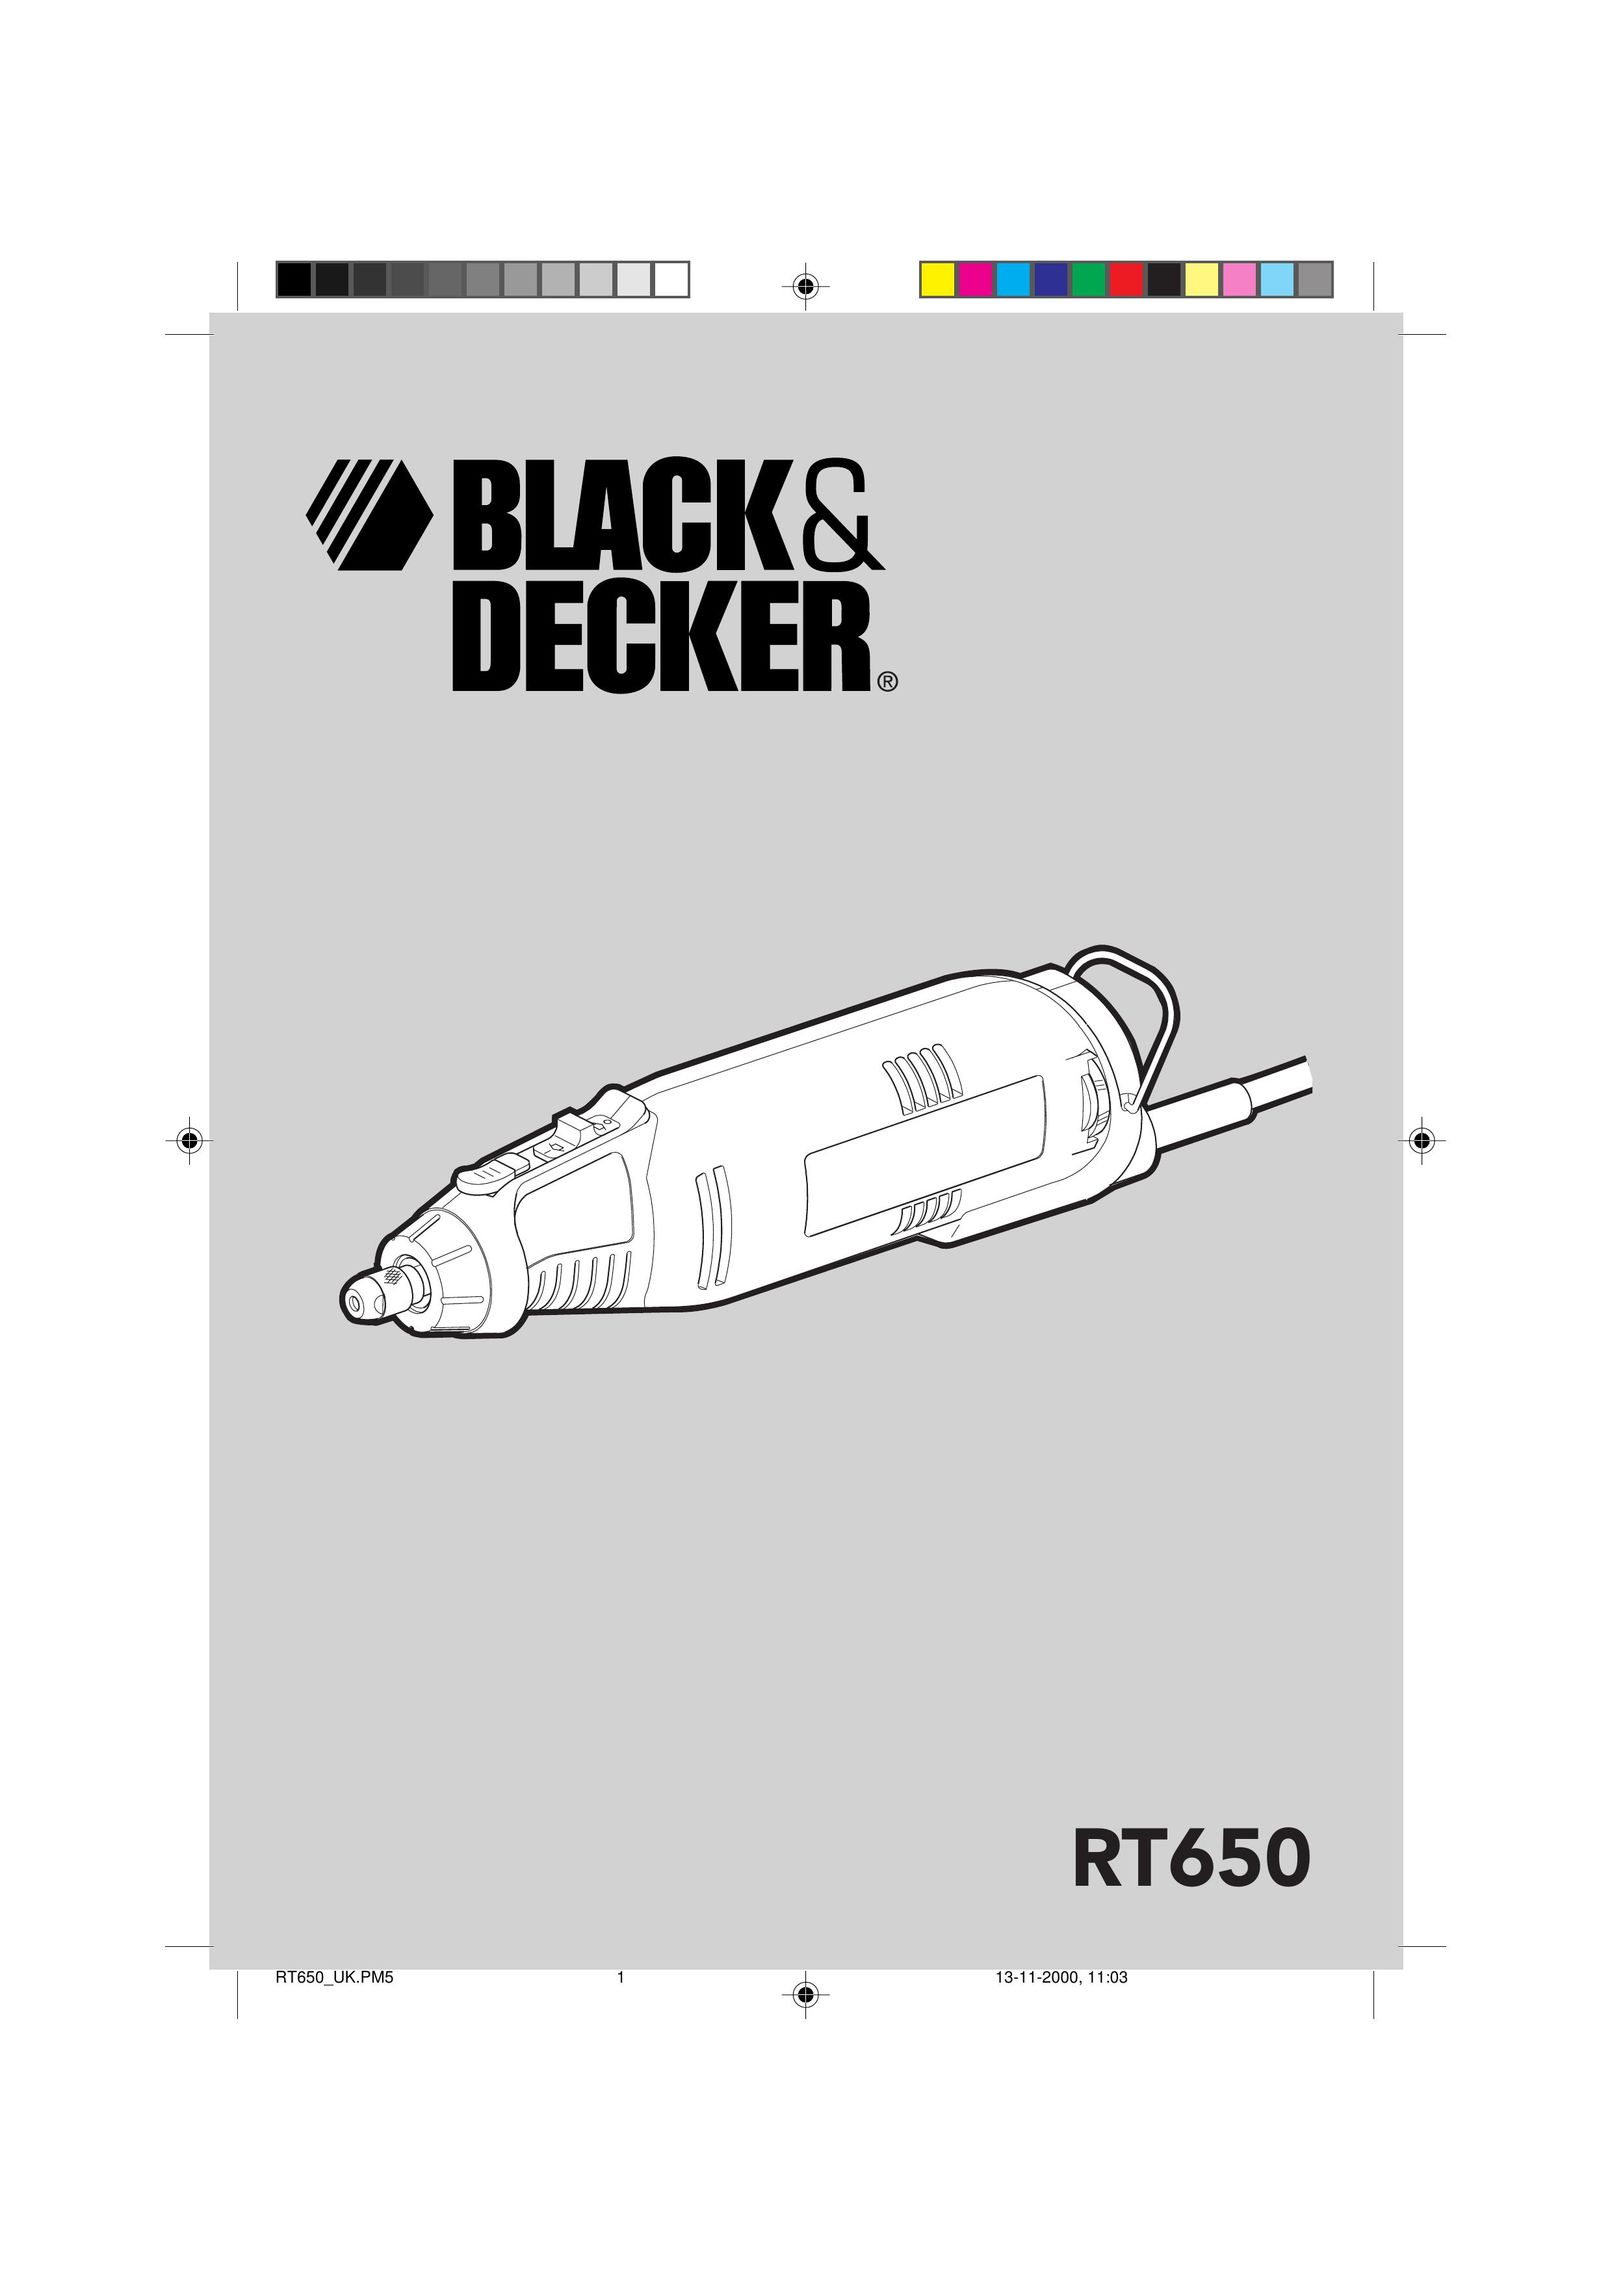 Black & Decker RT650 Power Hammer User Manual